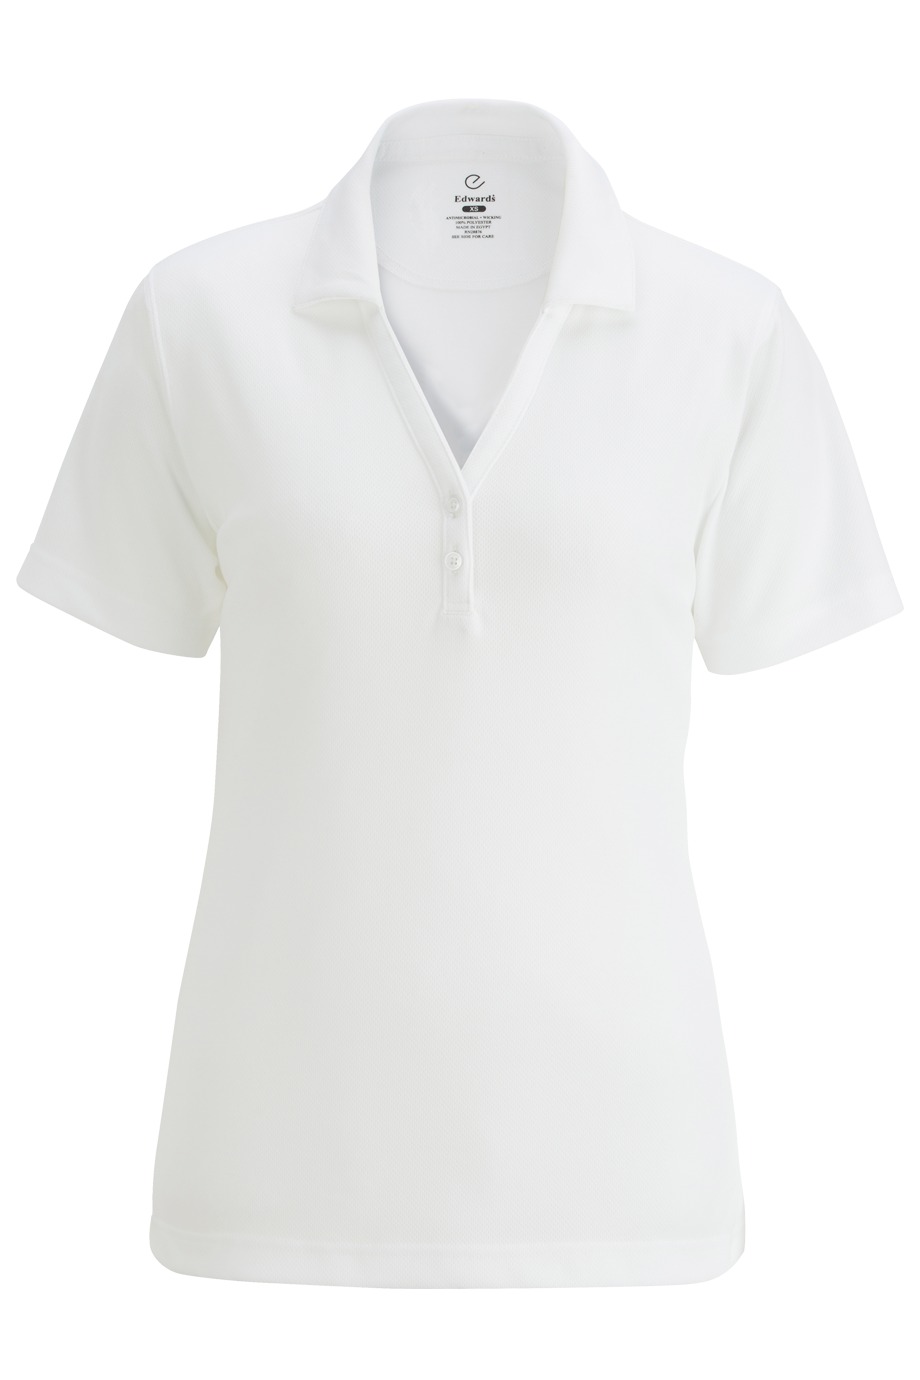 Edwards Garment 5583 - Ladies Johnny Collar Mesh Polo